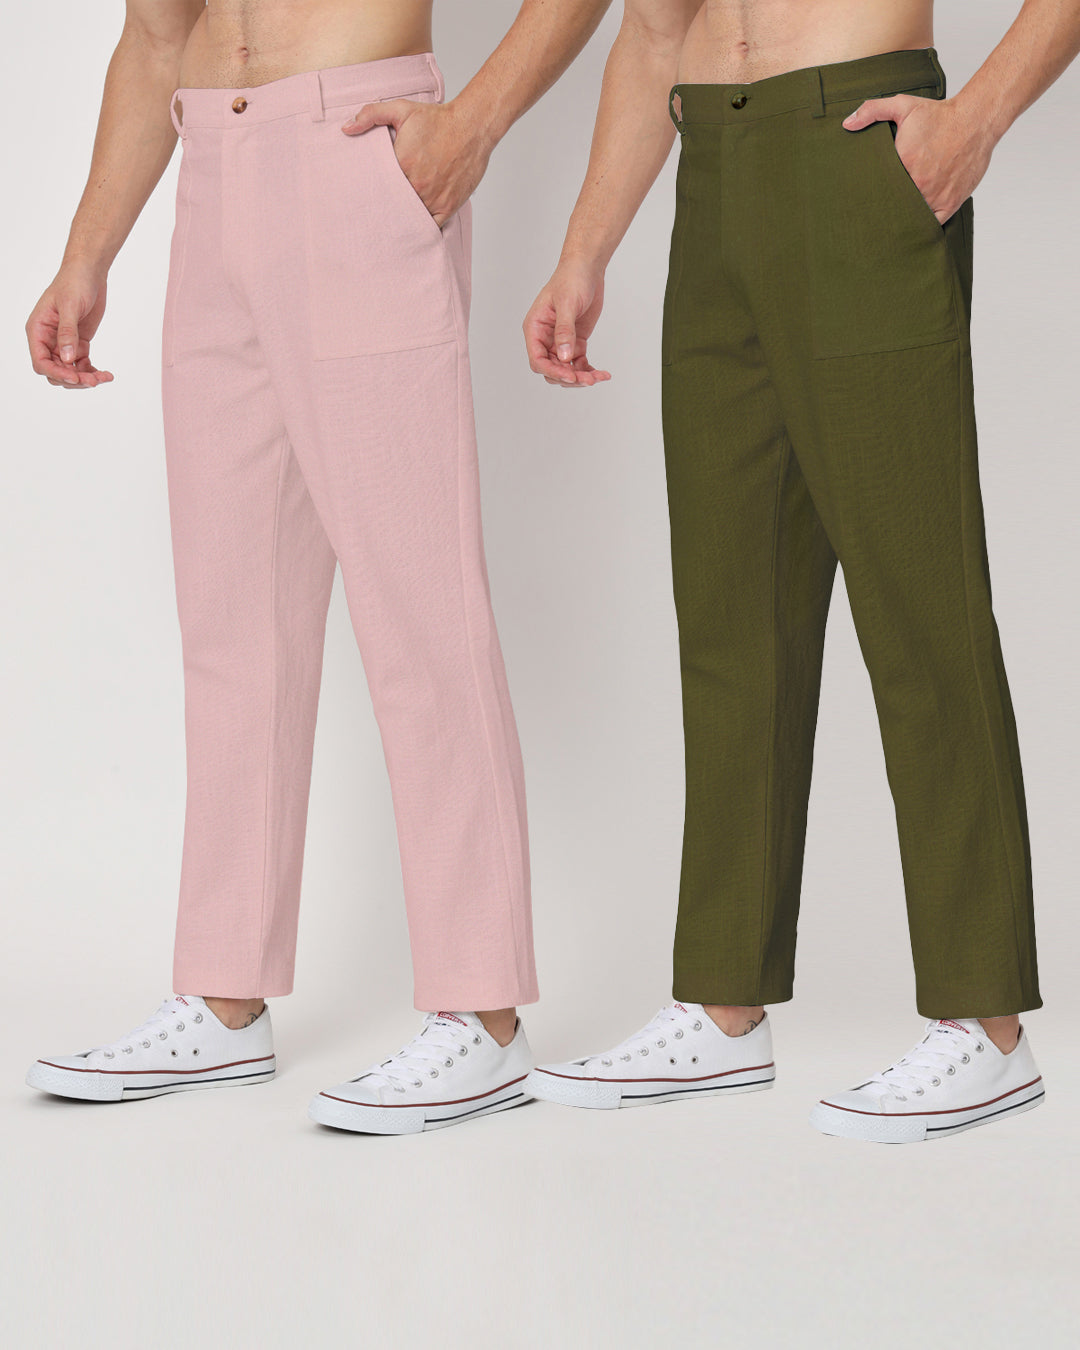 Combo : Comfy Ease Fondant Pink & Olive Green Men's Pants - Set of 2